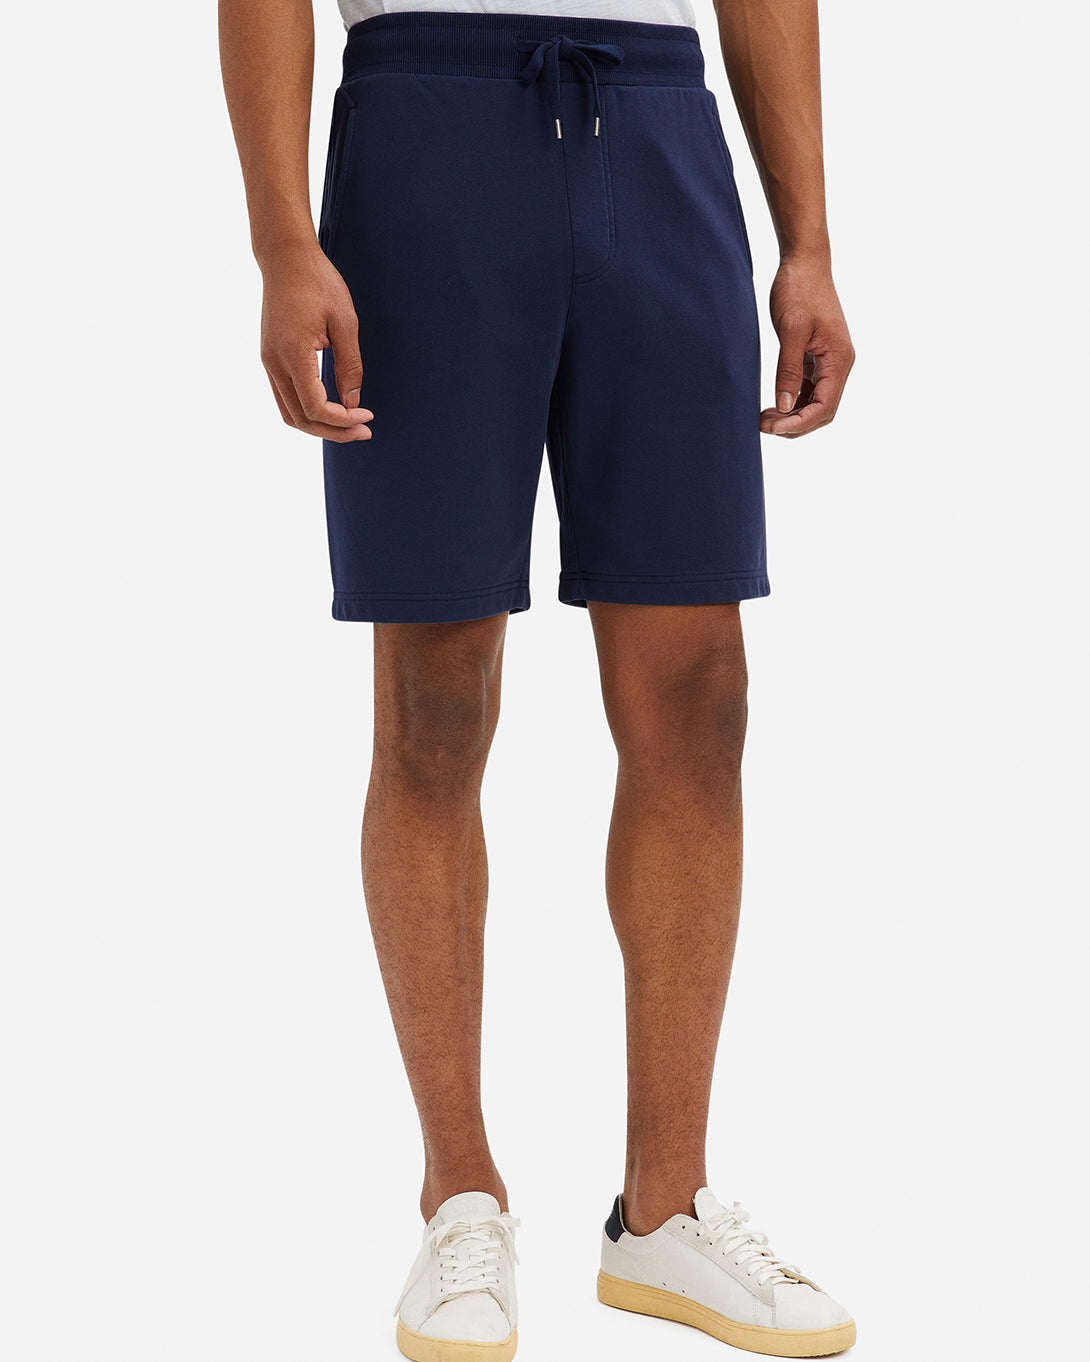 Navy Men's Bklyn Shorts